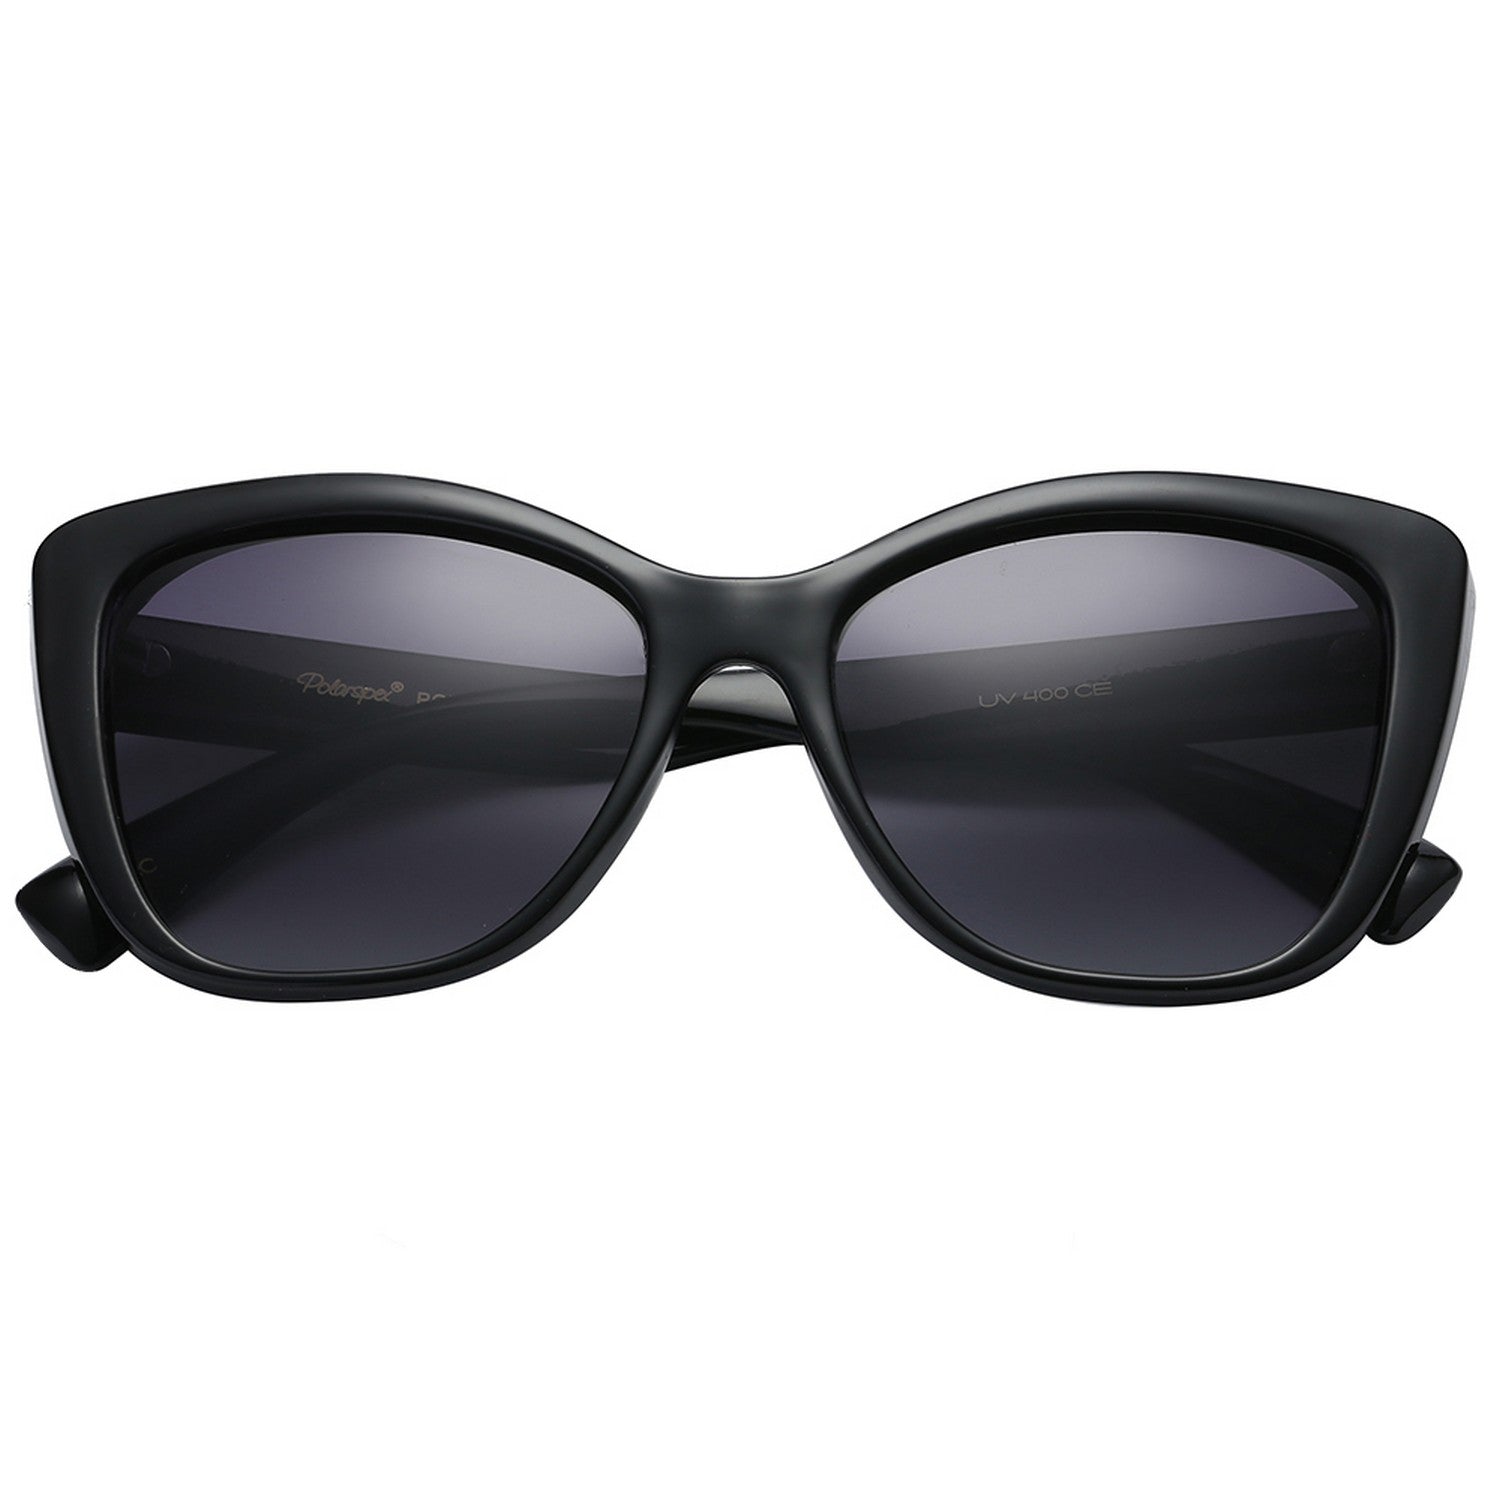 Polarspex Polarized Jackie-O Cat Eyes Style Sunglasses with Gloss Black Frames and Polarized Gradient Smoke Lenses for Women